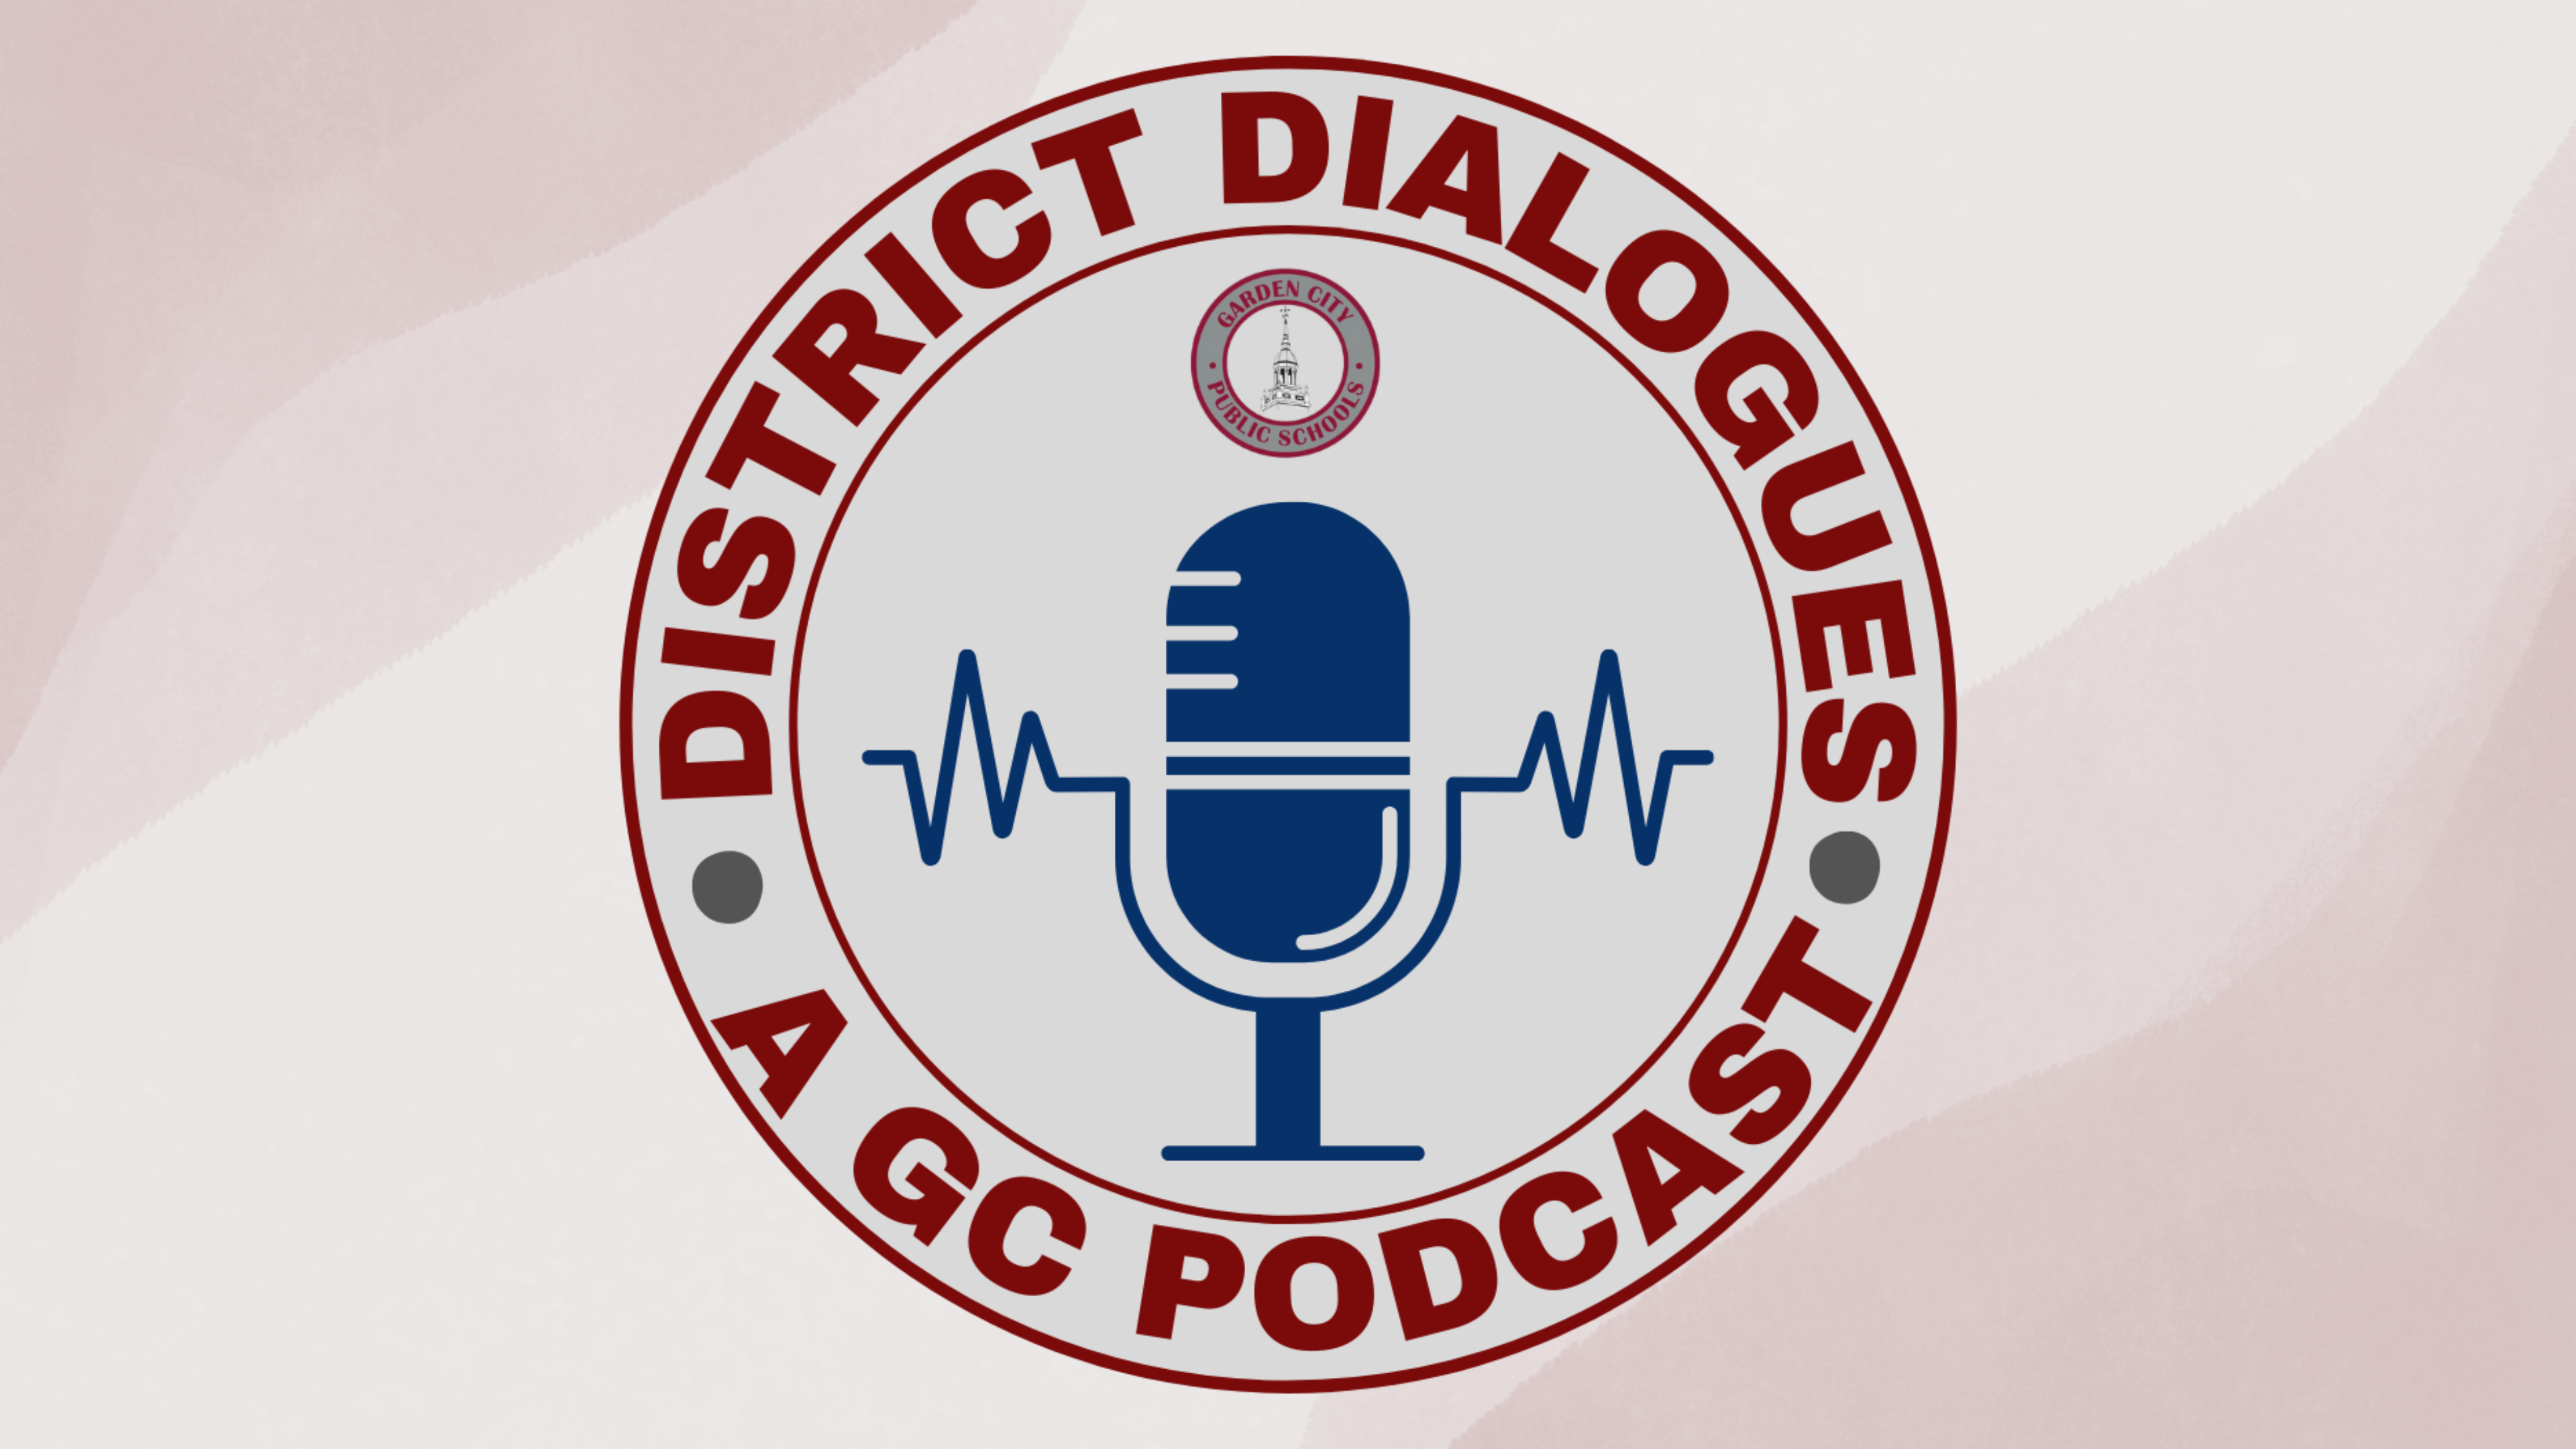 District Dialogues